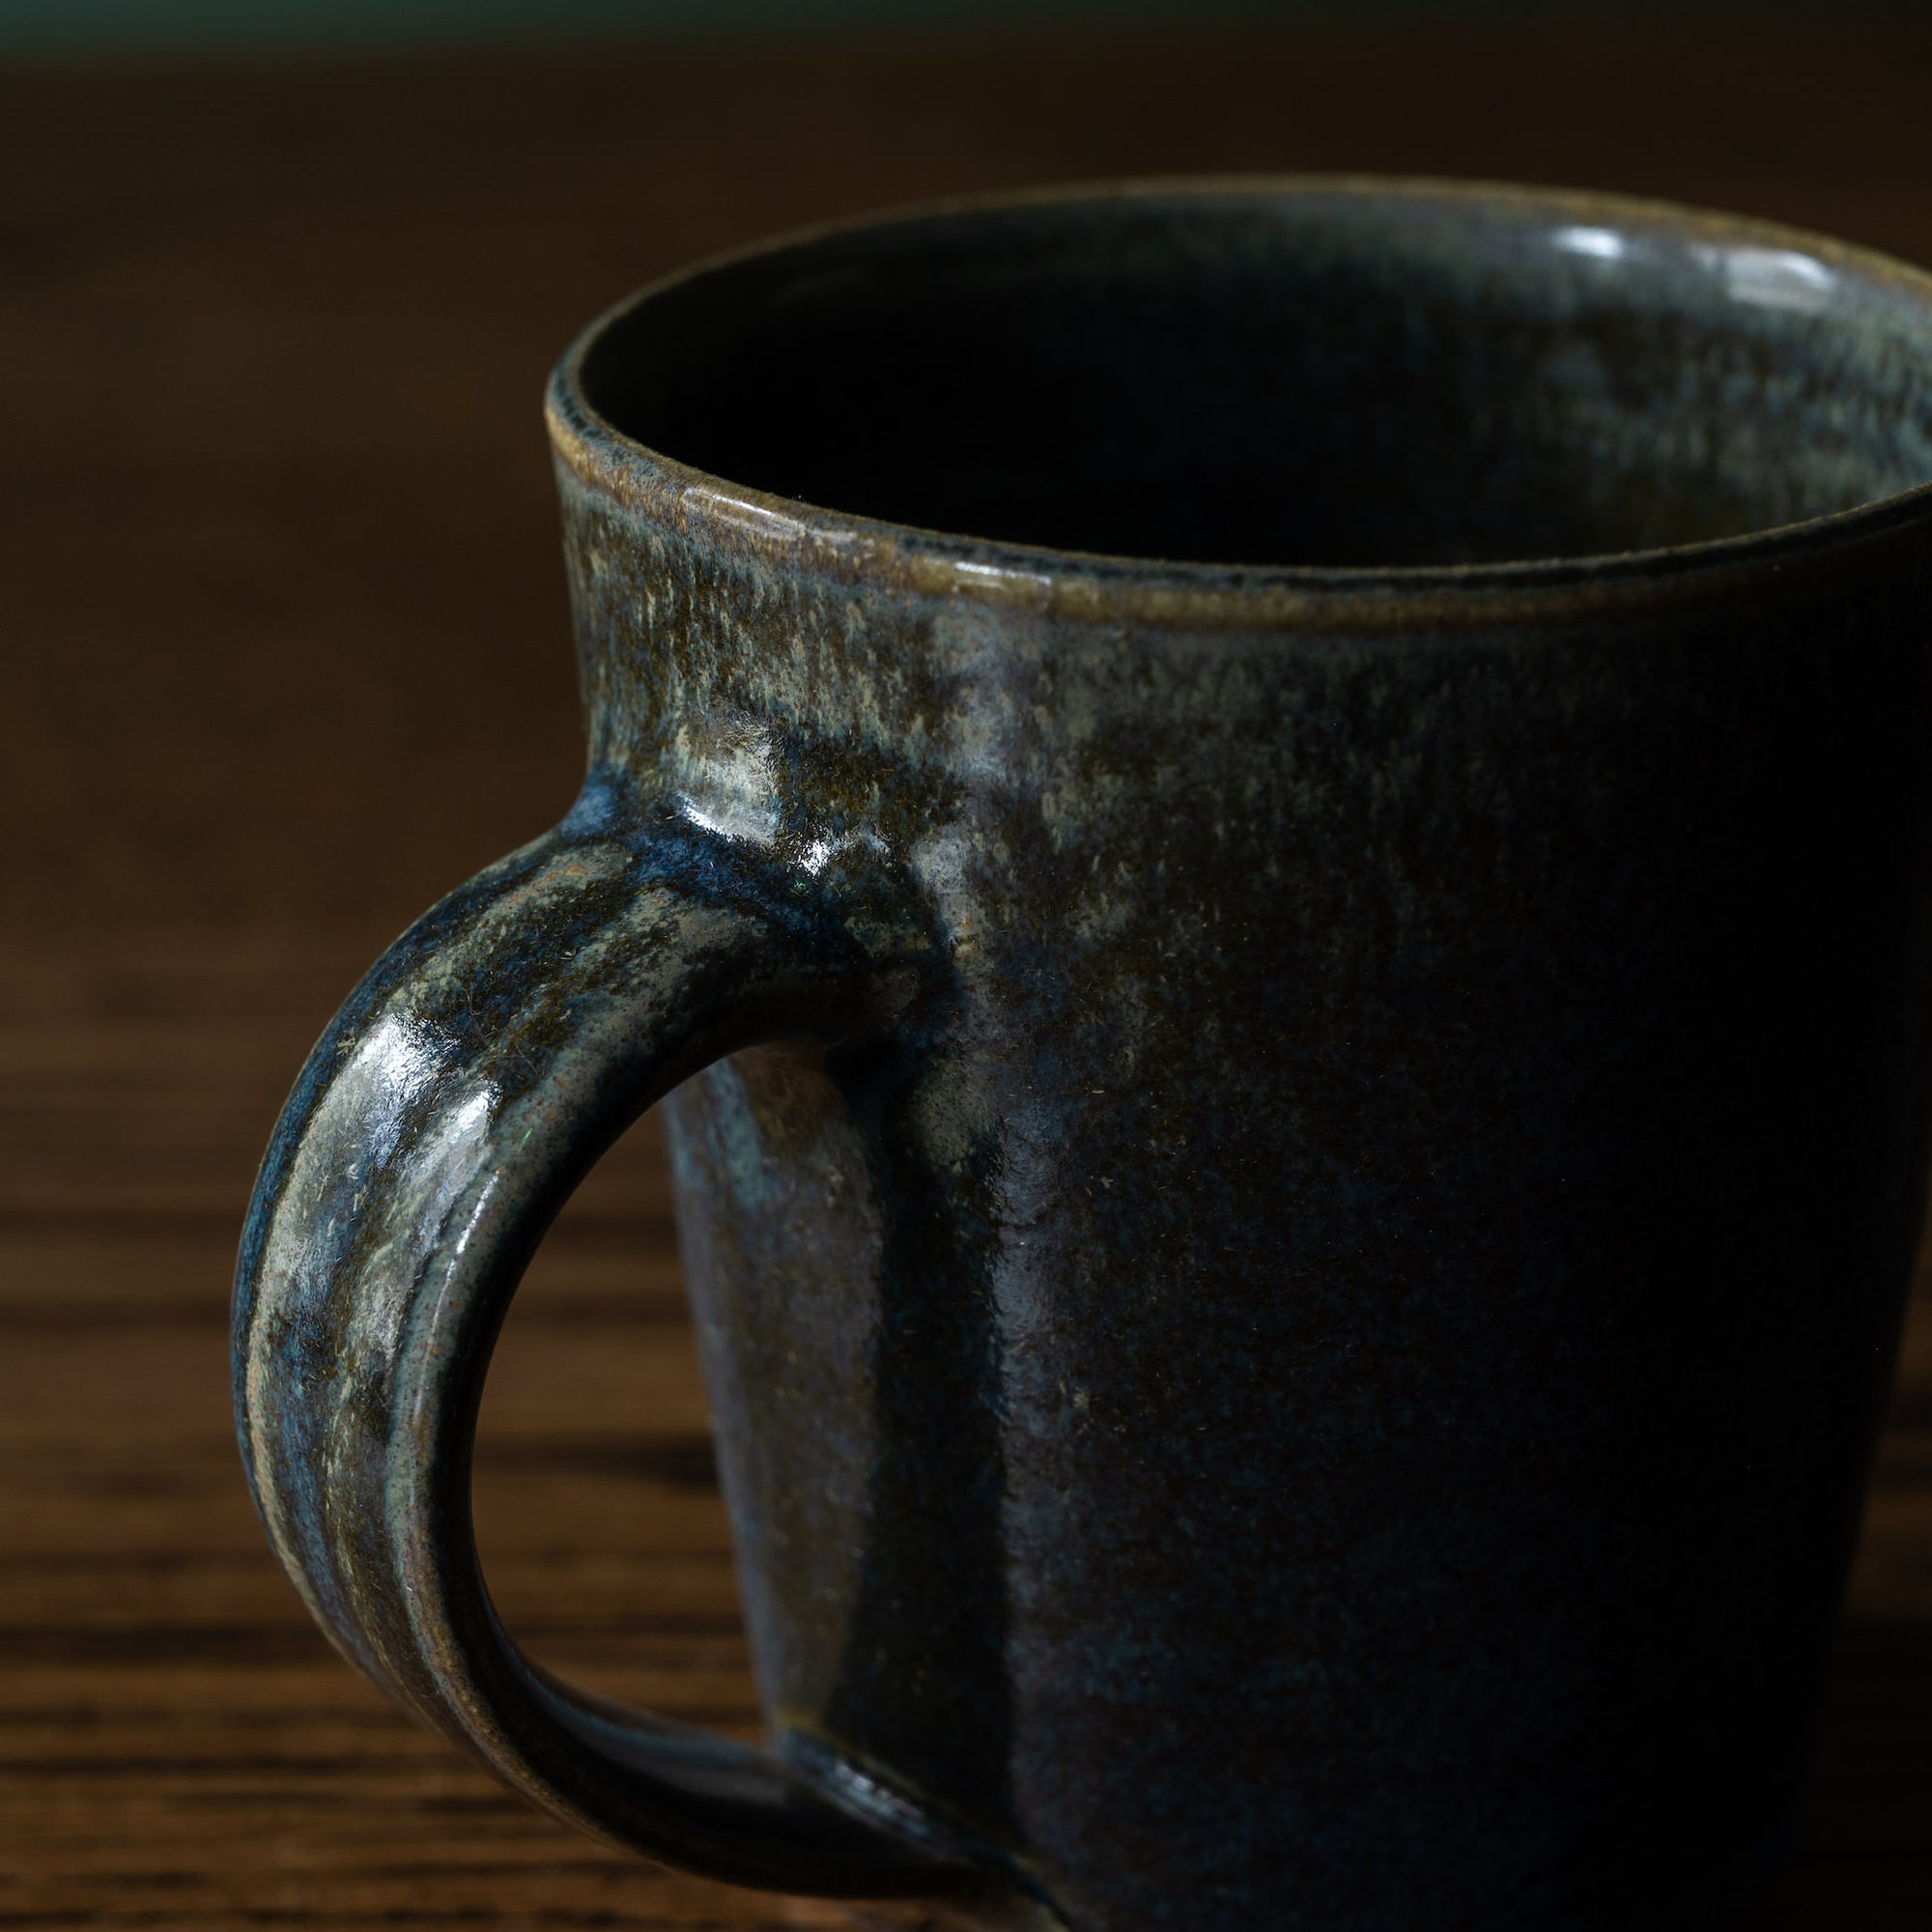 Pottery West Stoneware Tapered Mug handle in Nori glaze